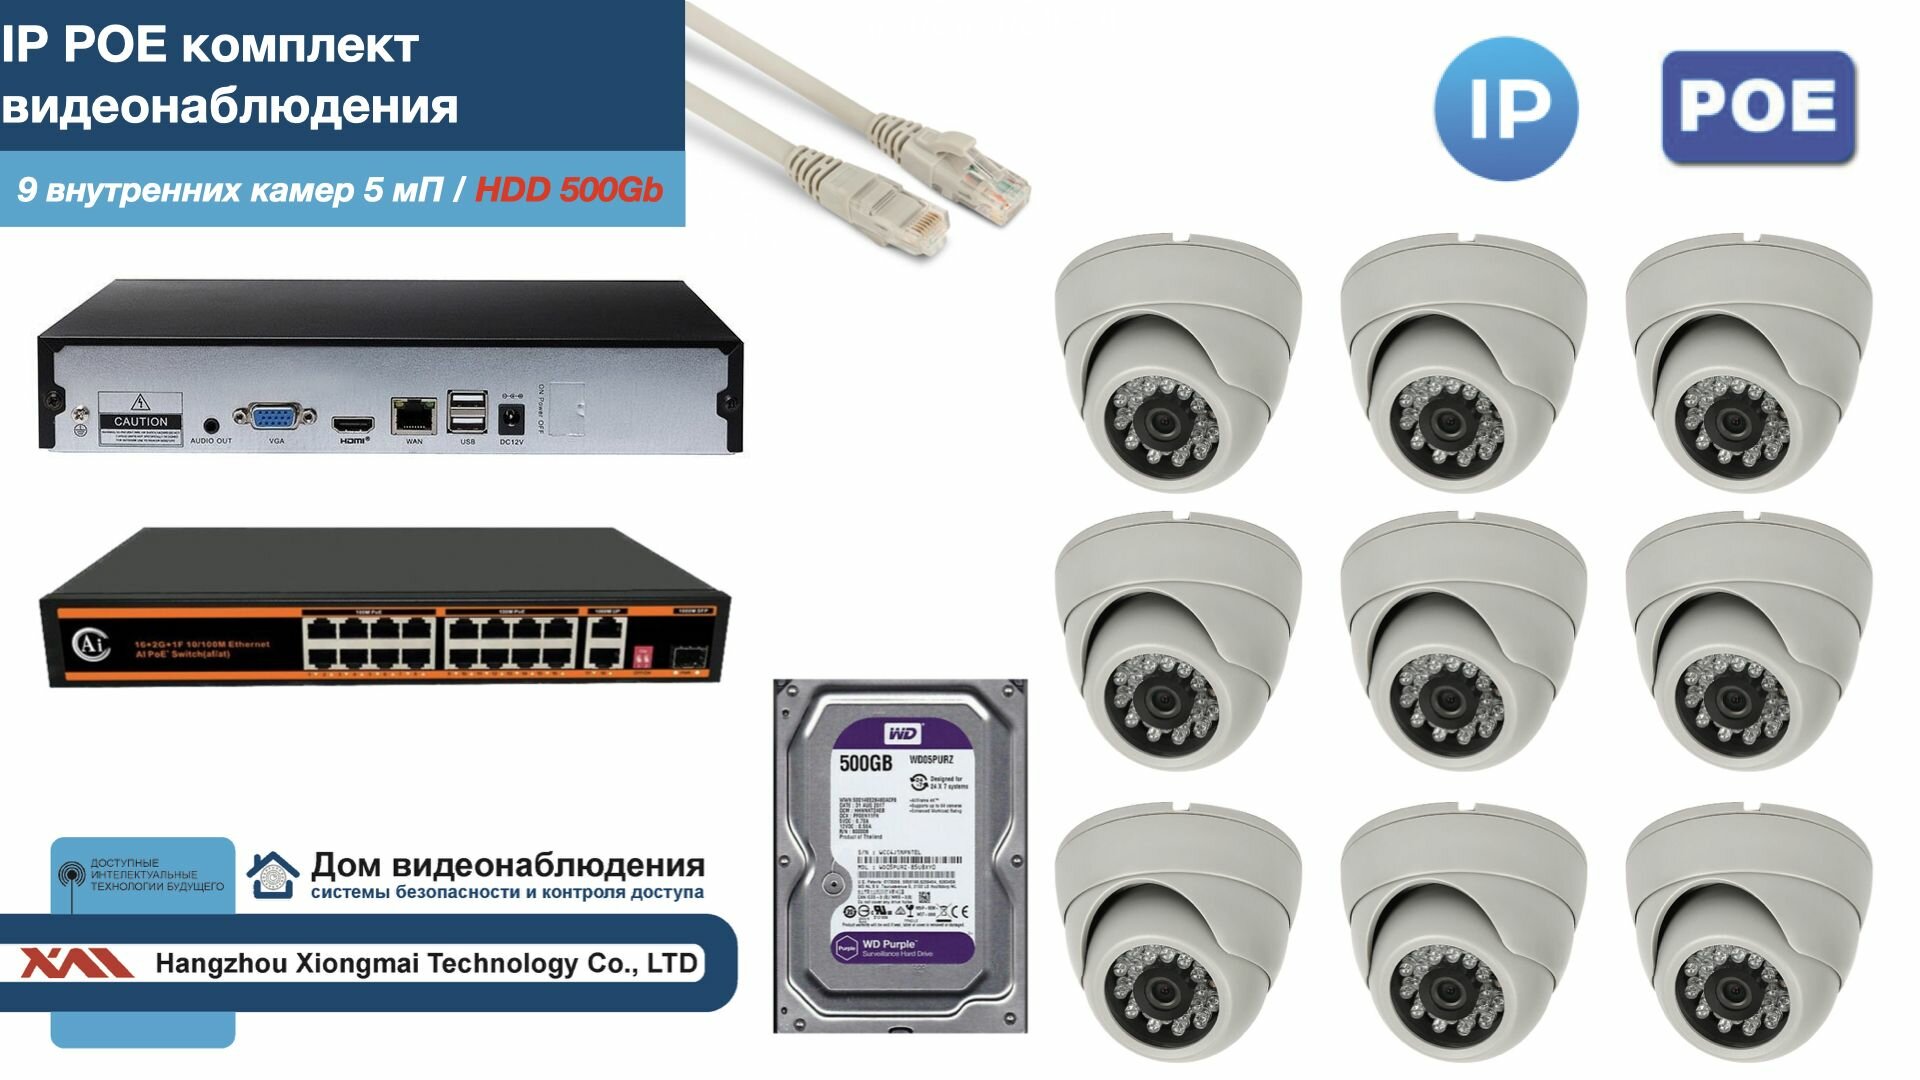 Полный IP POE комплект видеонаблюдения на 9 камер (KIT9IPPOE300W5MP-HDD500Gb)